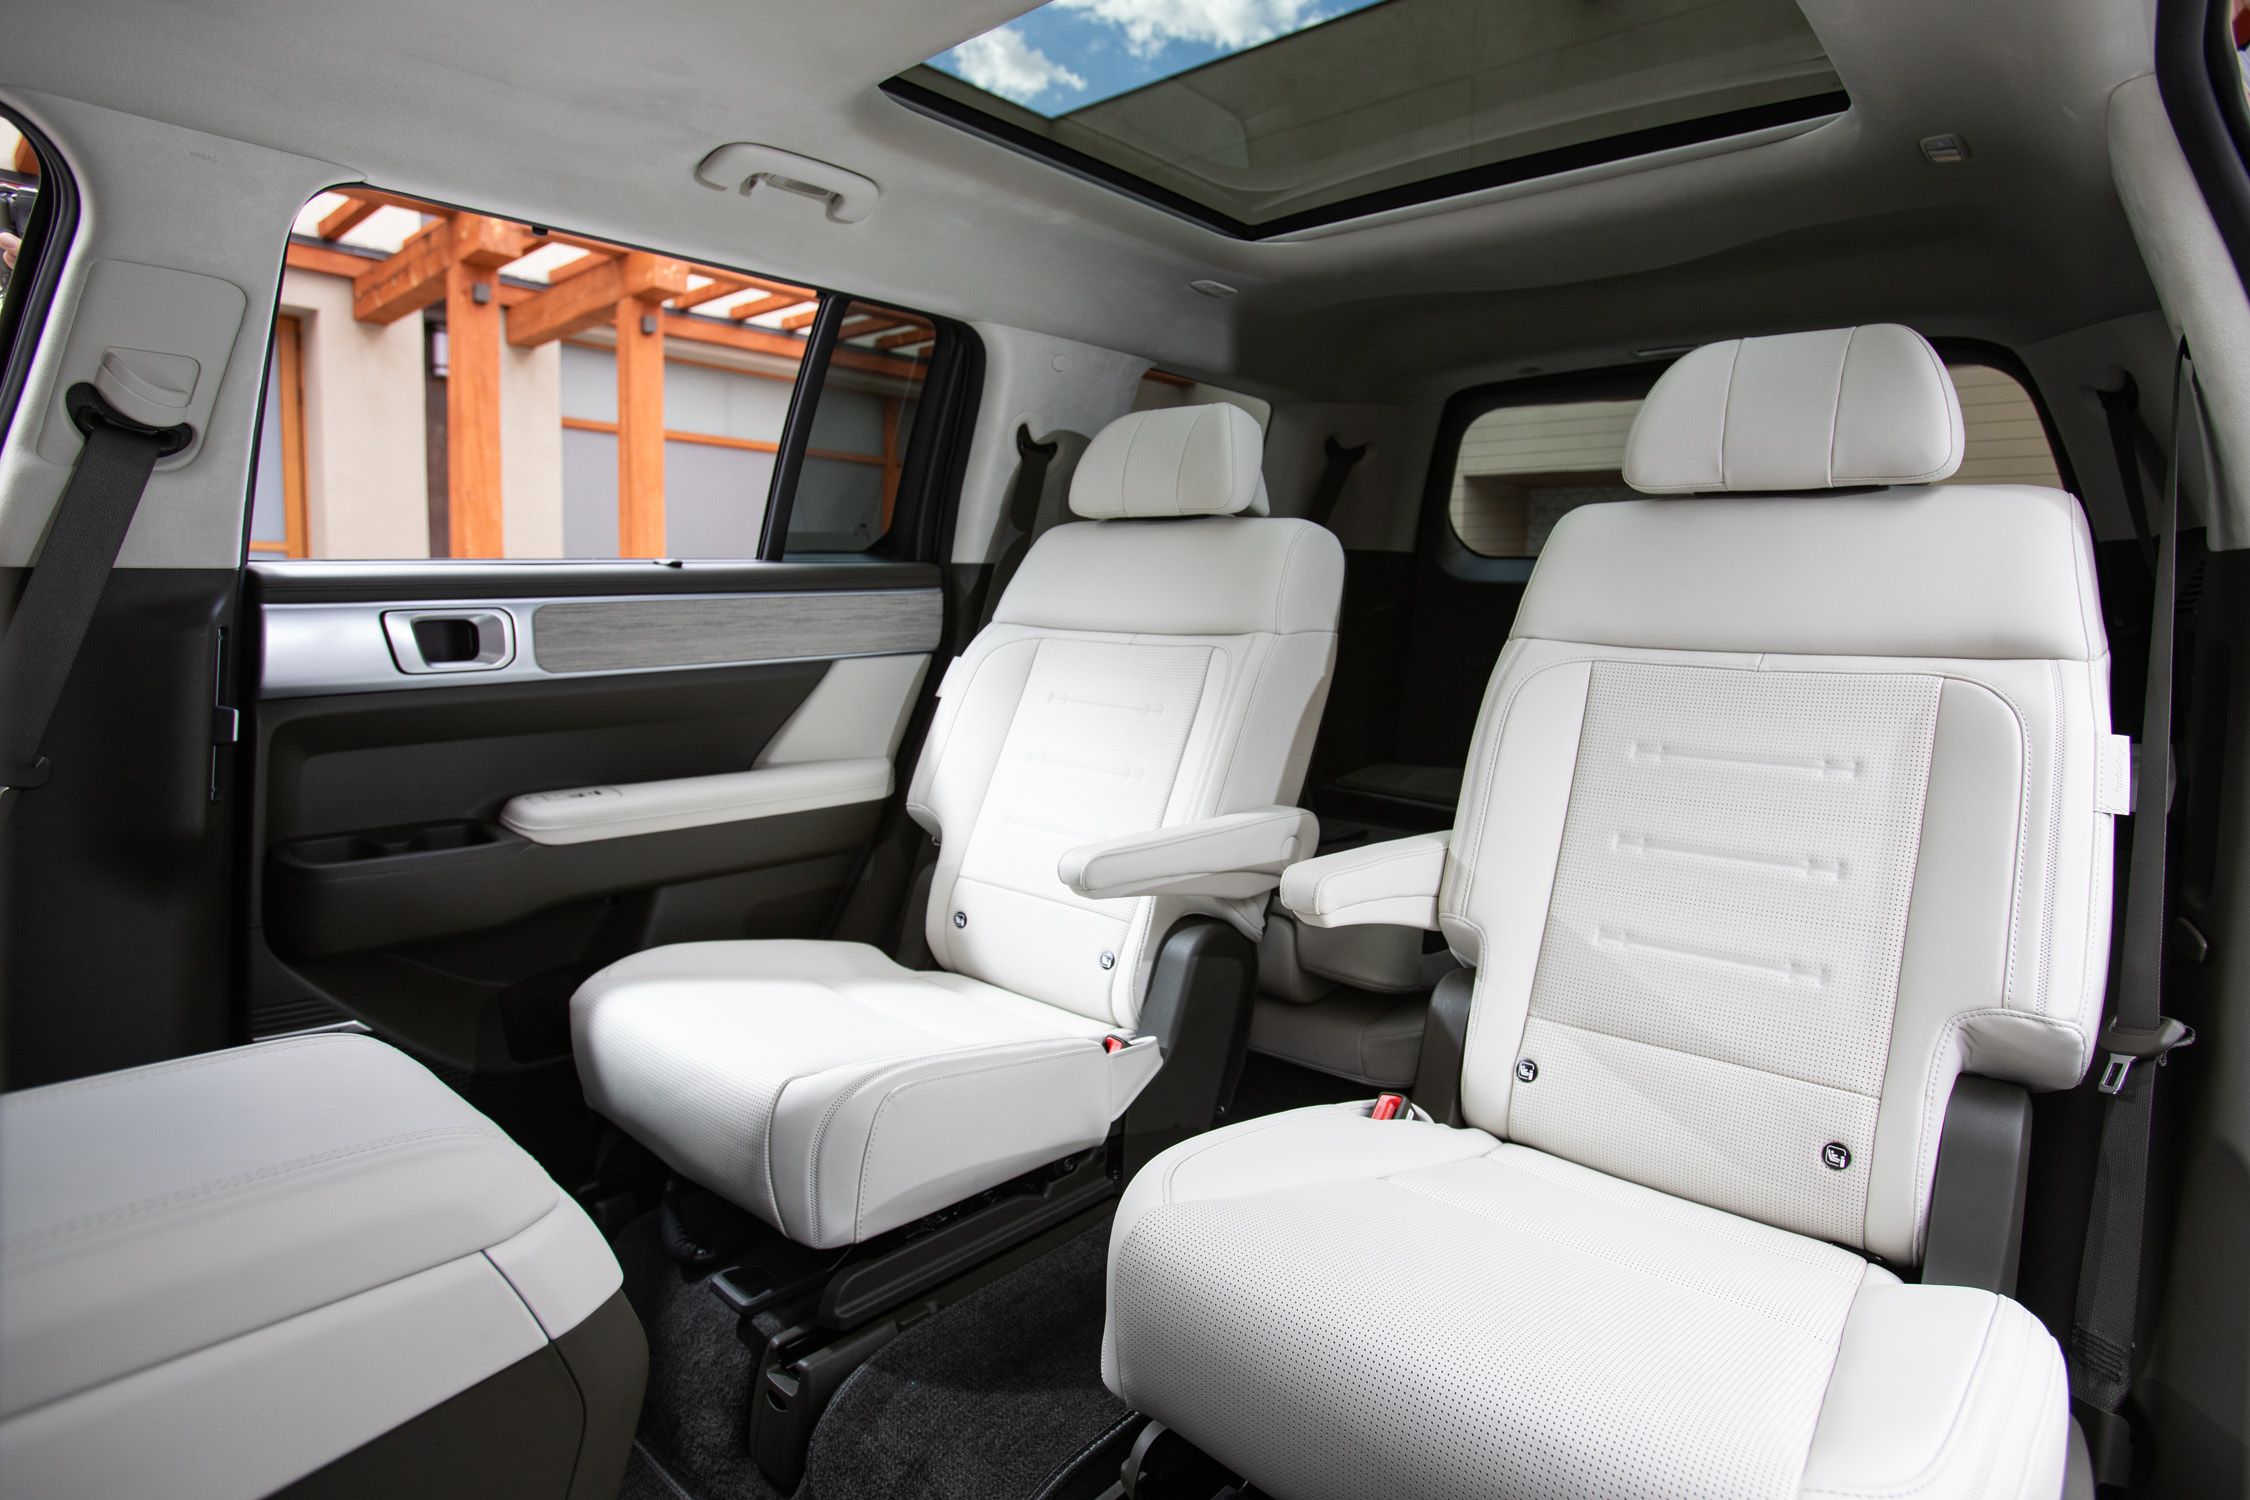 Hyundai Santa Fe interior - Seats